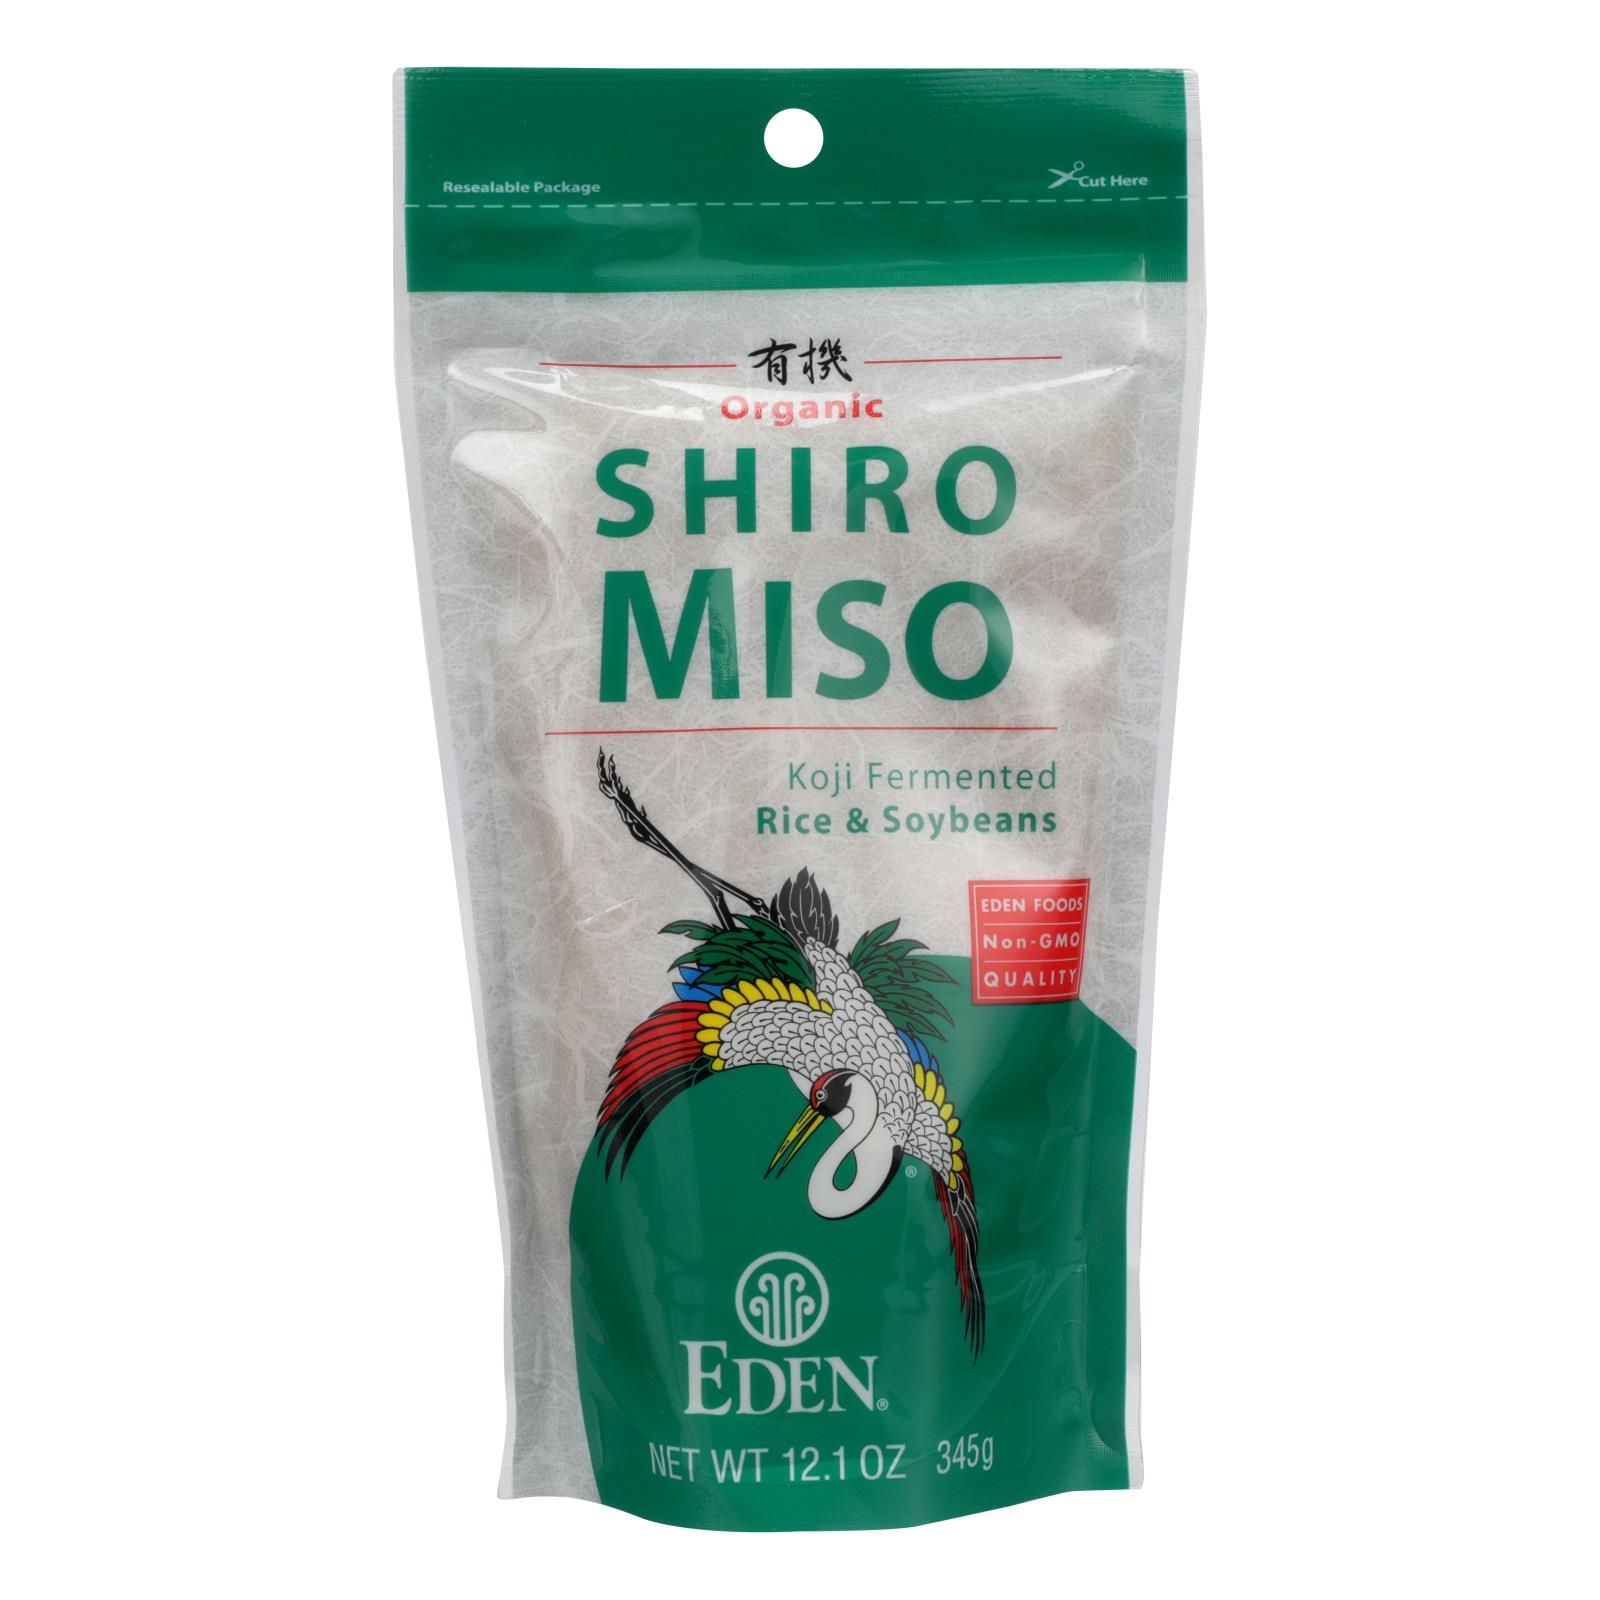 Eden Organic Shiro Miso - 12개 묶음상품 - 12.1 OZ